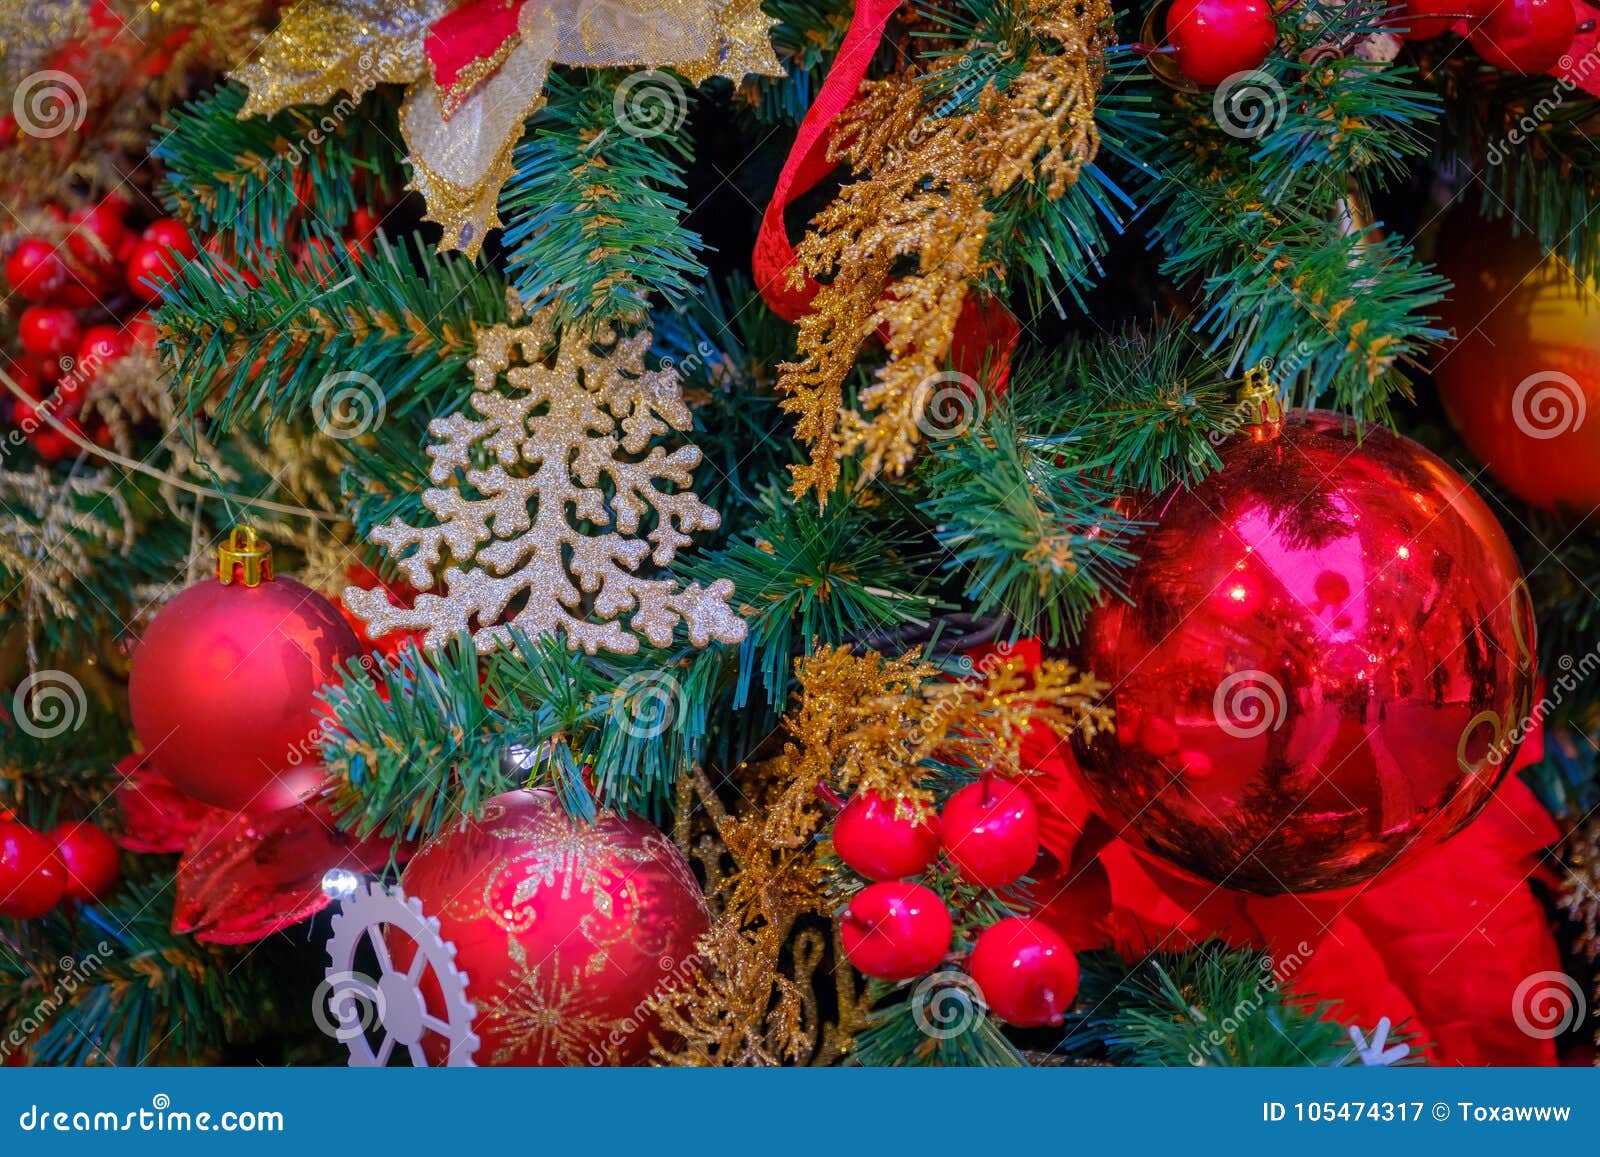 Christmas Tree Decorations Macro Stock Image - Image of december, gift ...